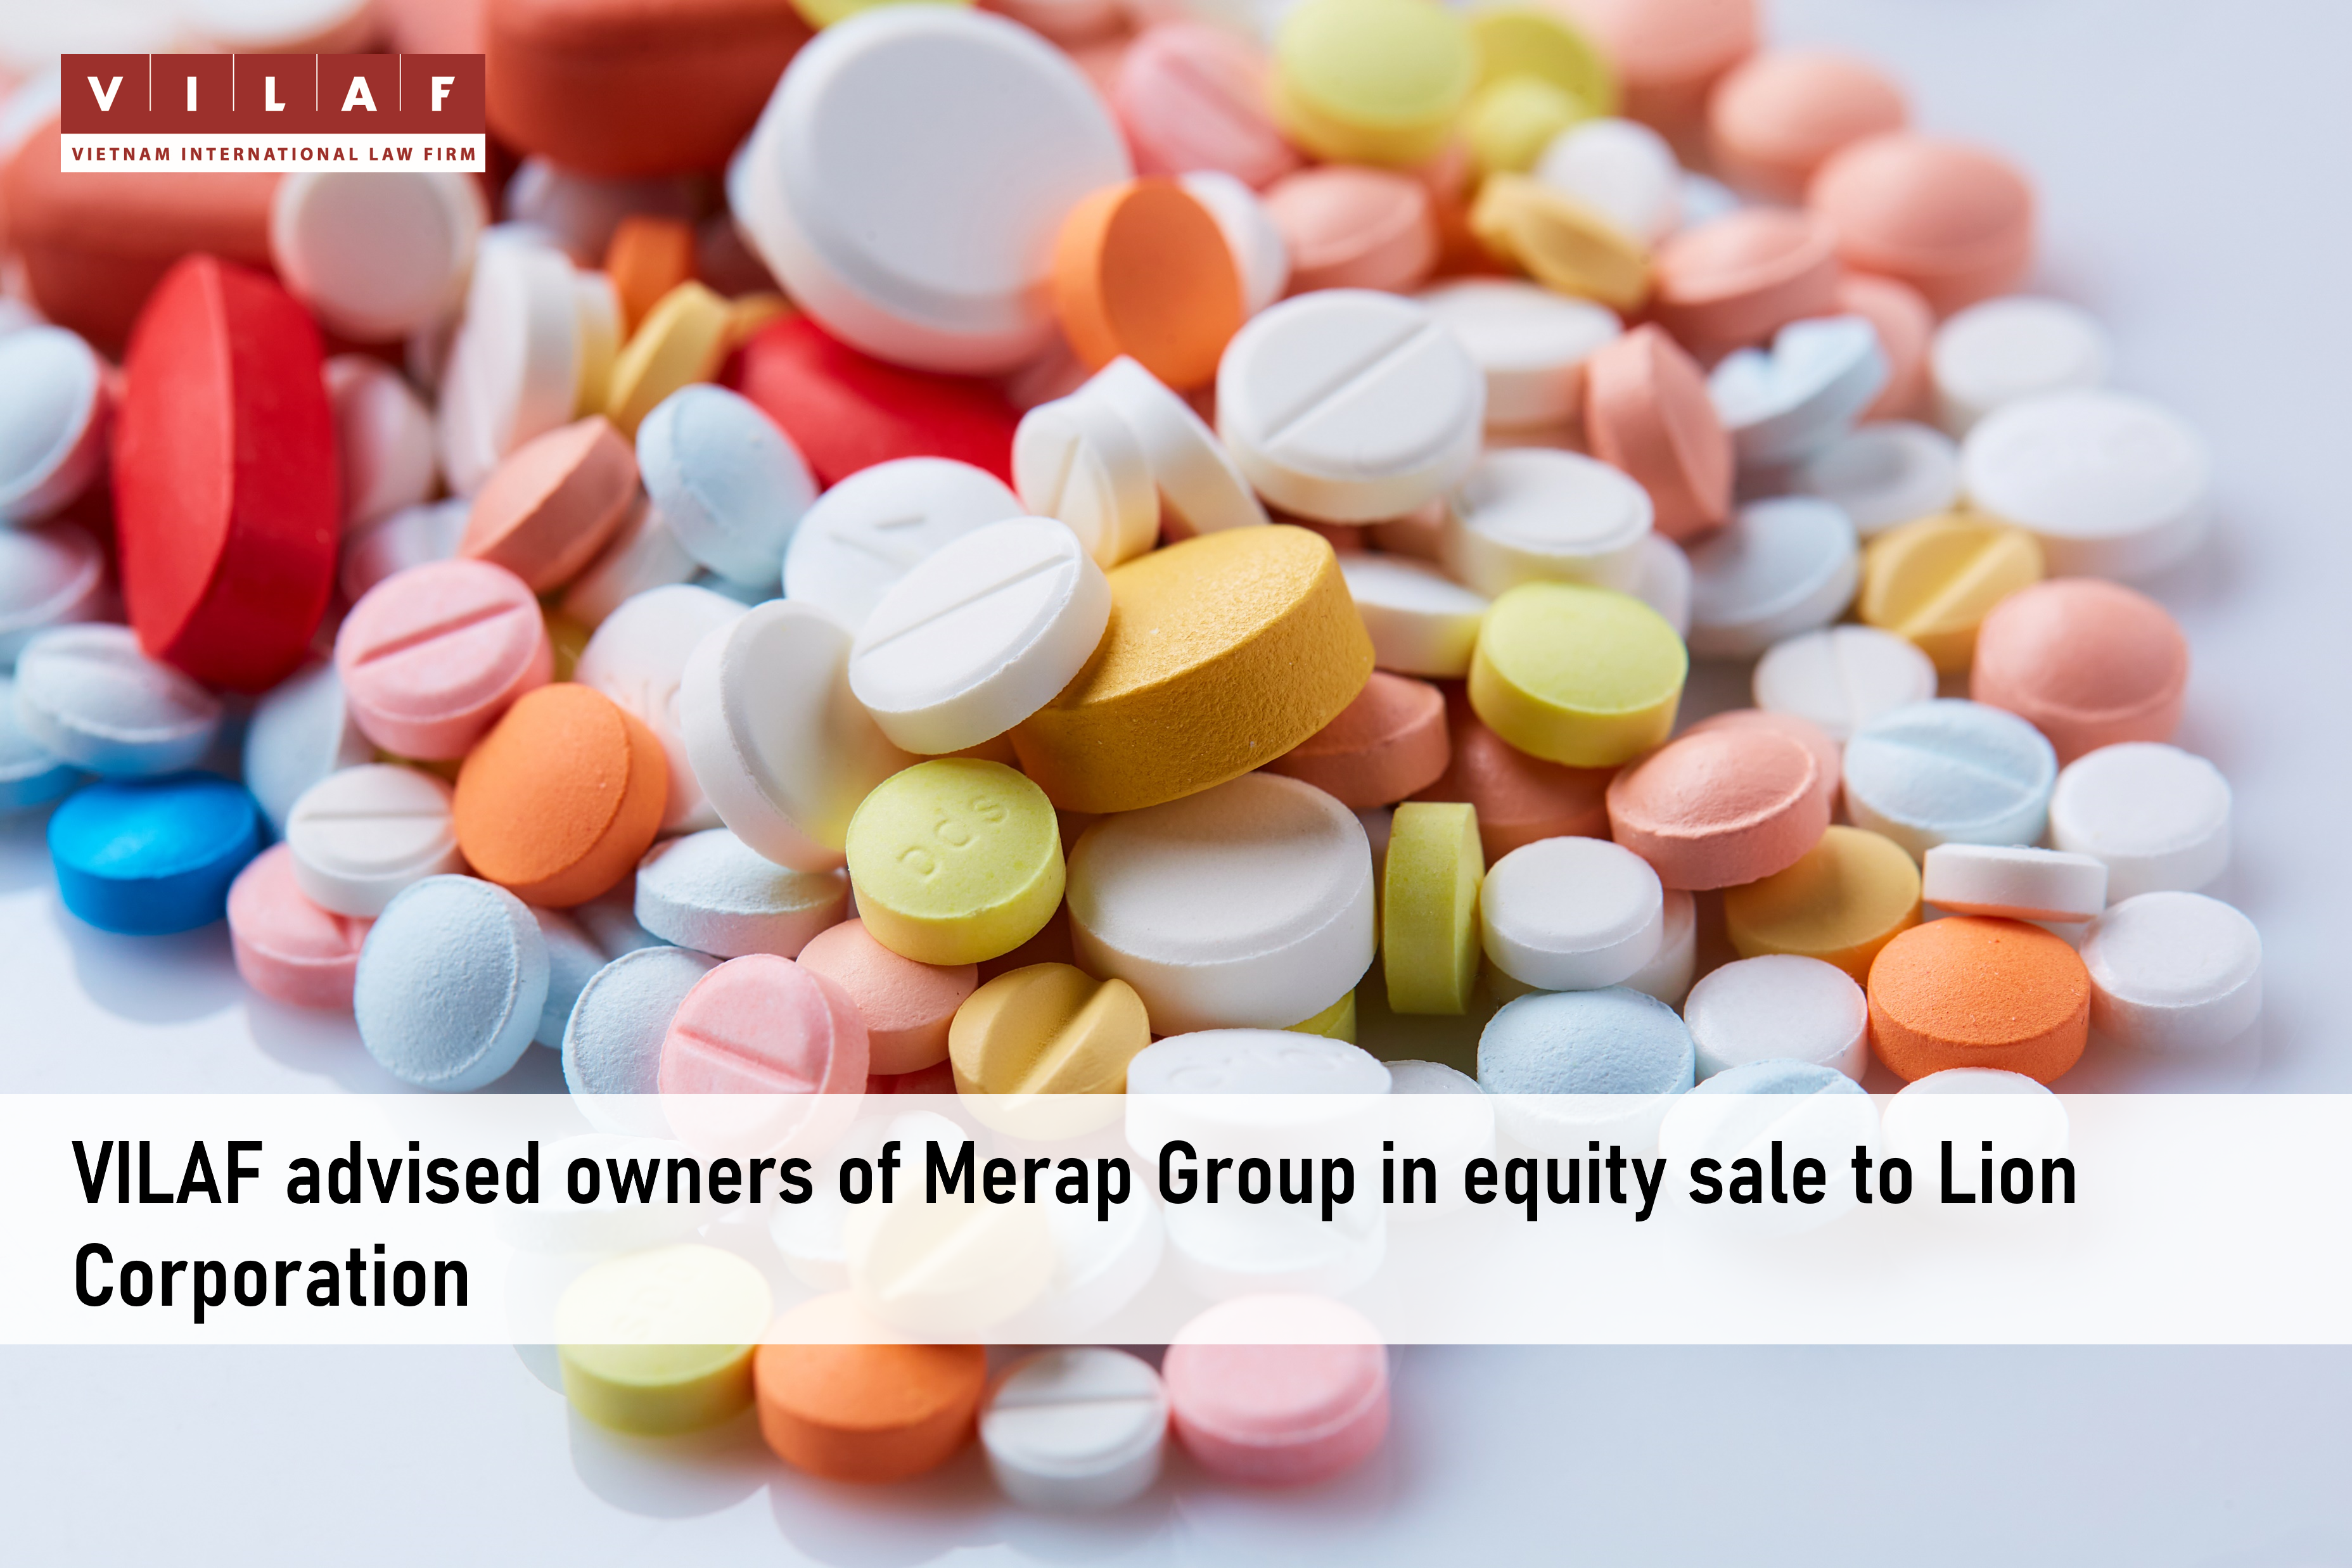 VILAF advised owners of Merap Group in equity sale to Lion Corporation - VILAF - Vietnam International Law Firm